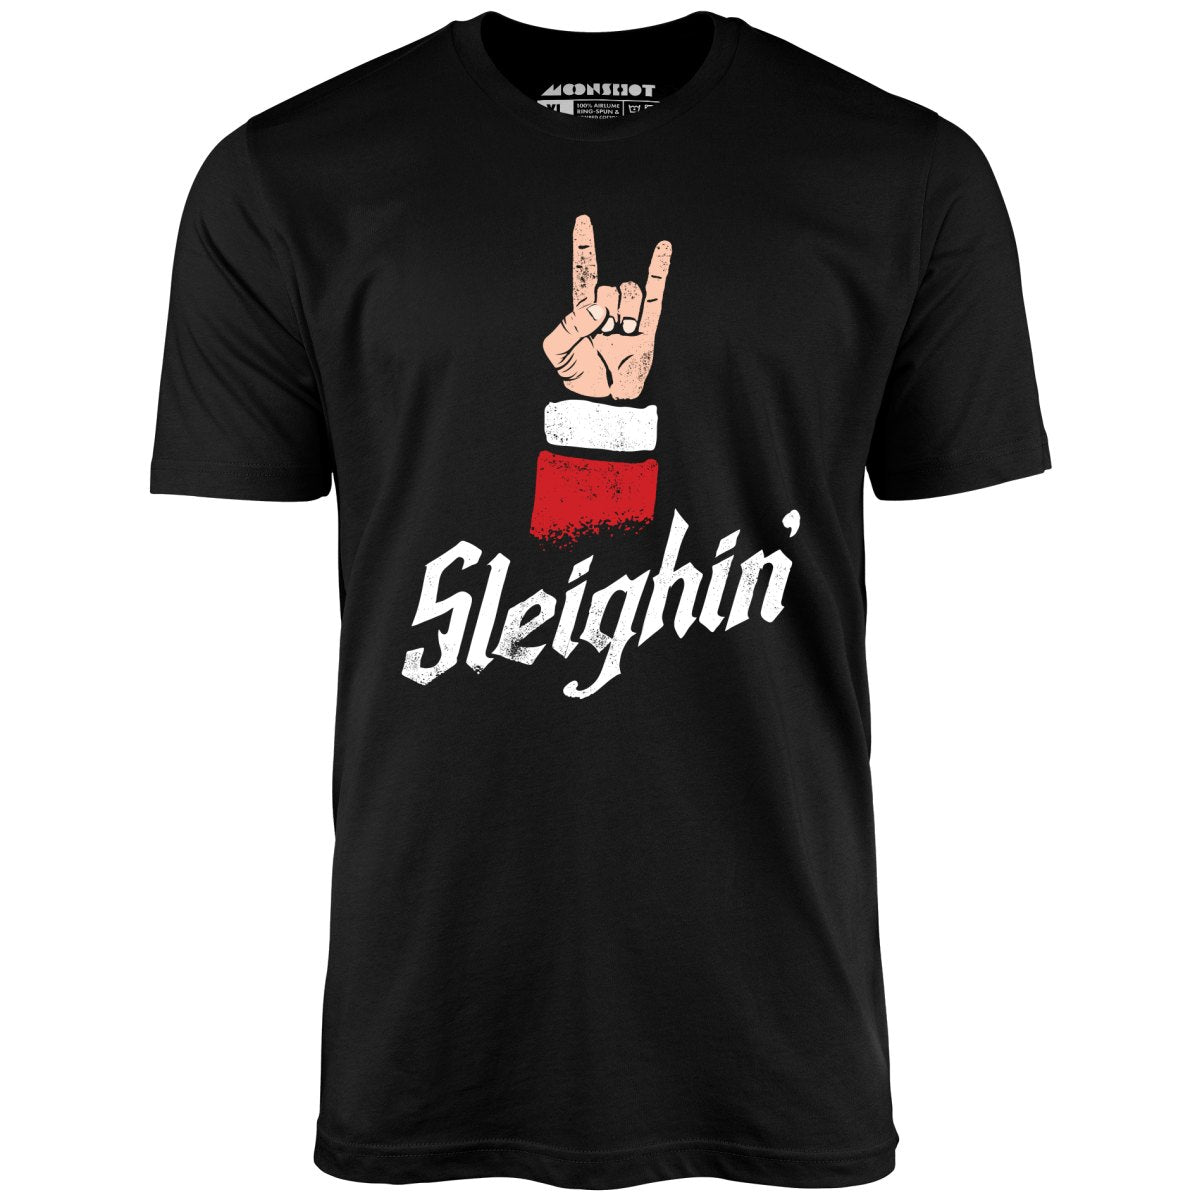 Sleighin' - Unisex T-Shirt